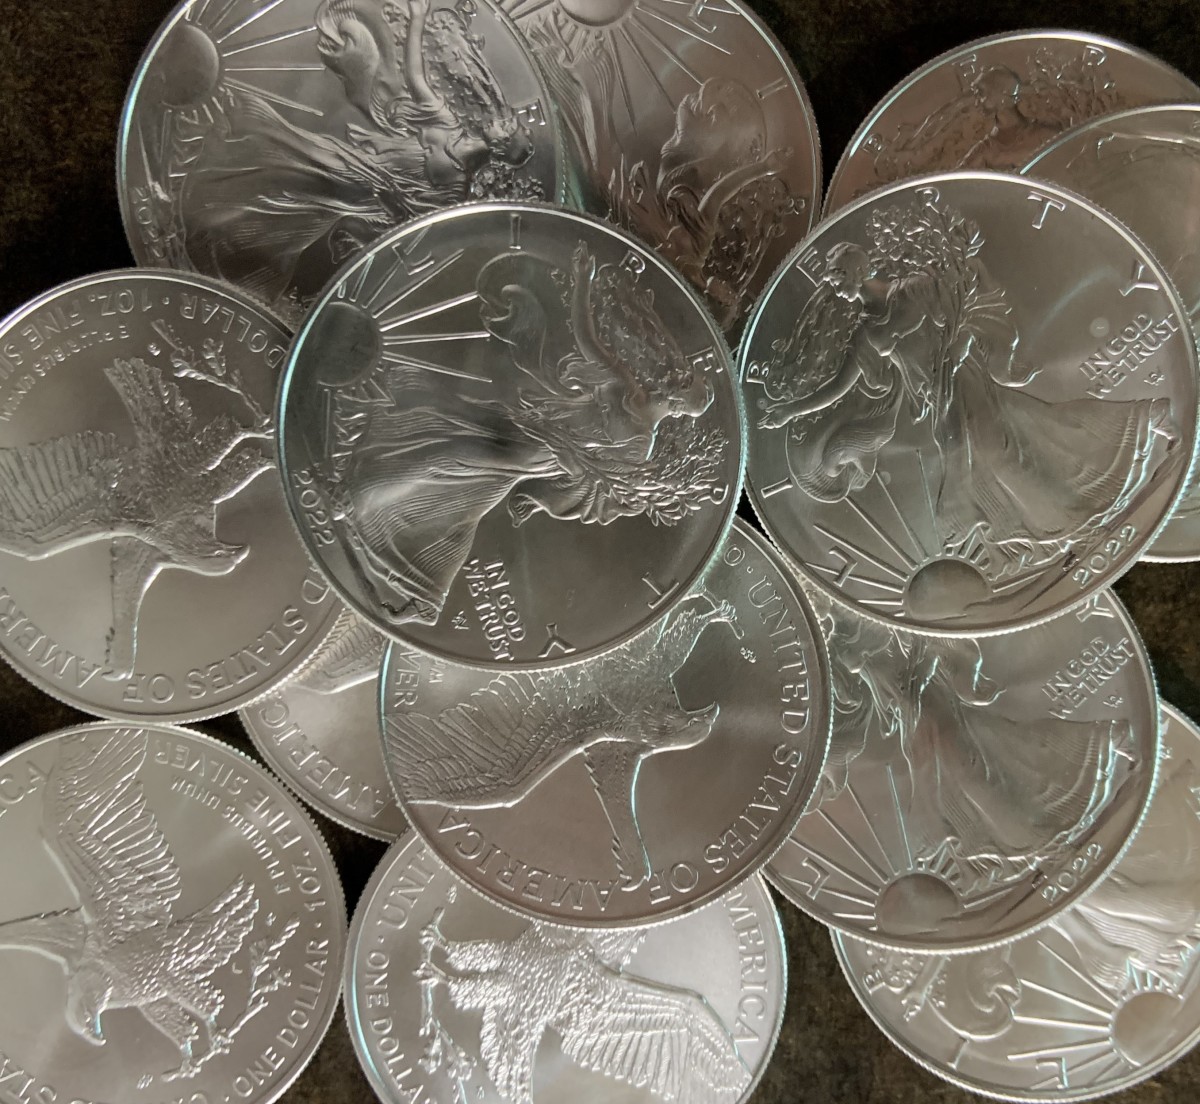 Value of $1 Silver Coin | American Silver Eagle Coin